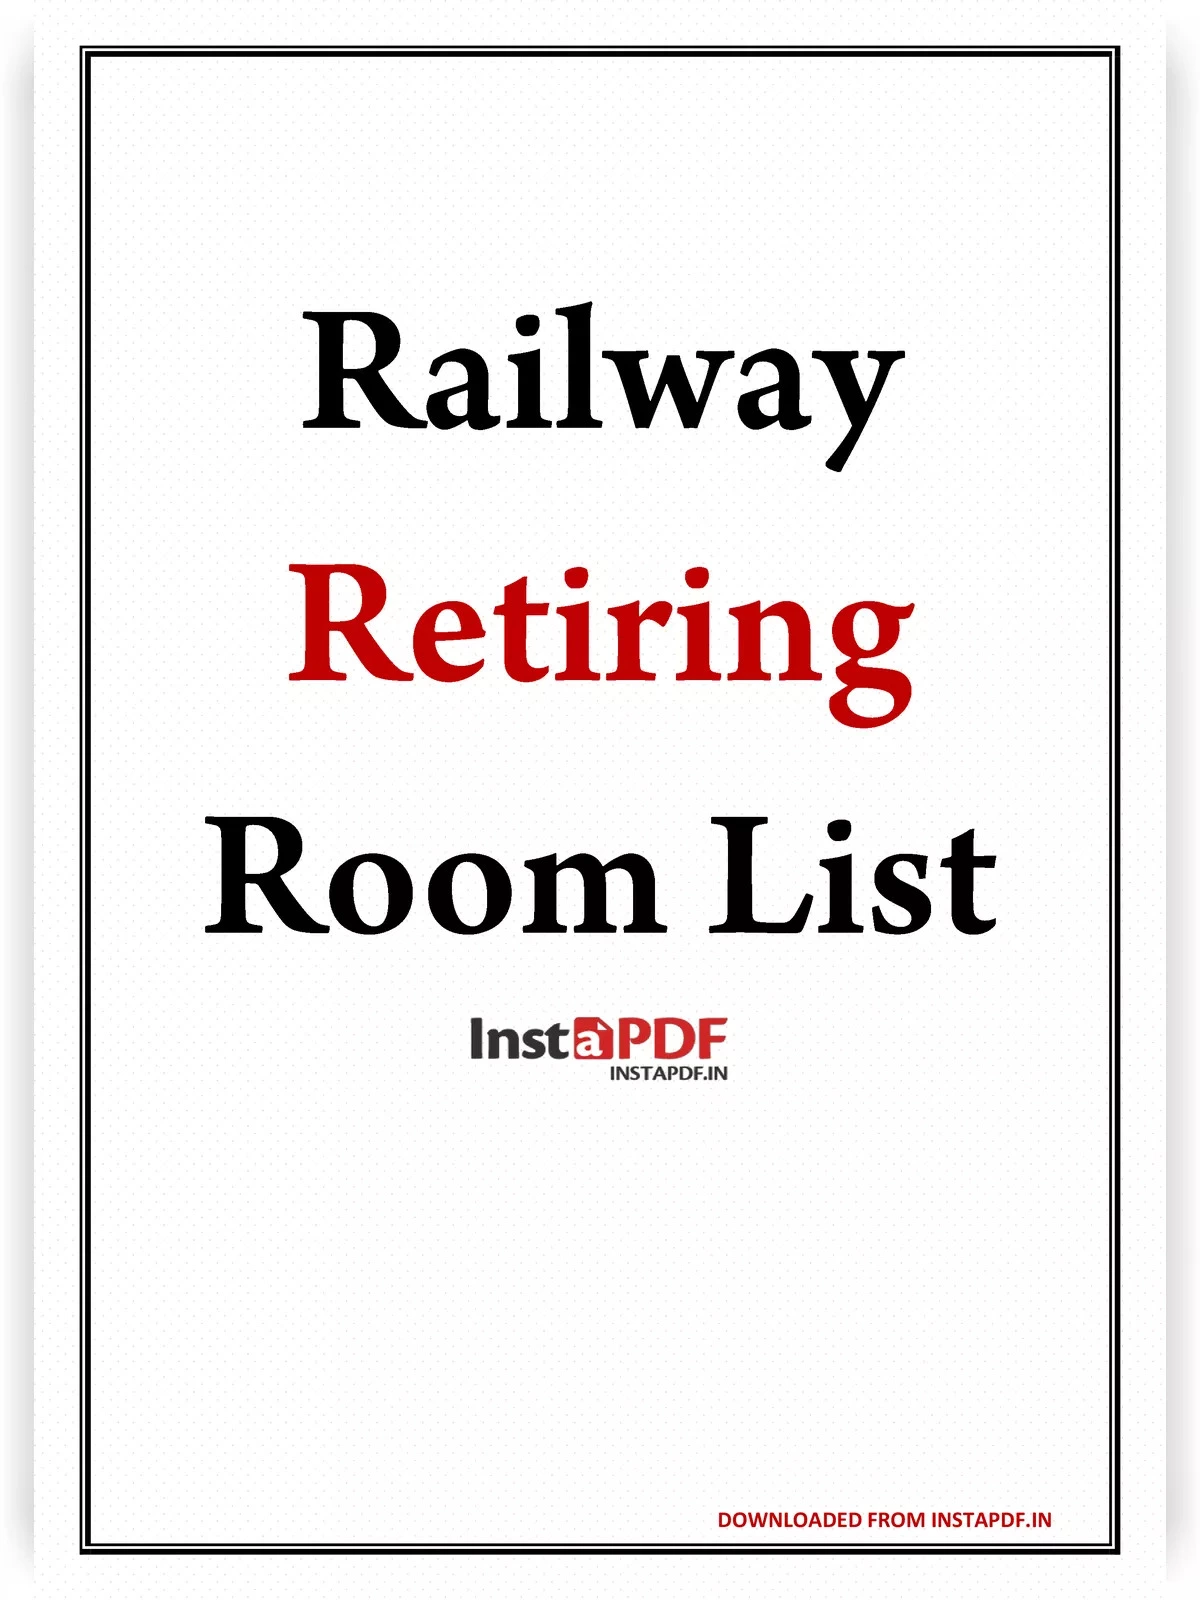 Railway Retiring Room List Pdf.webp